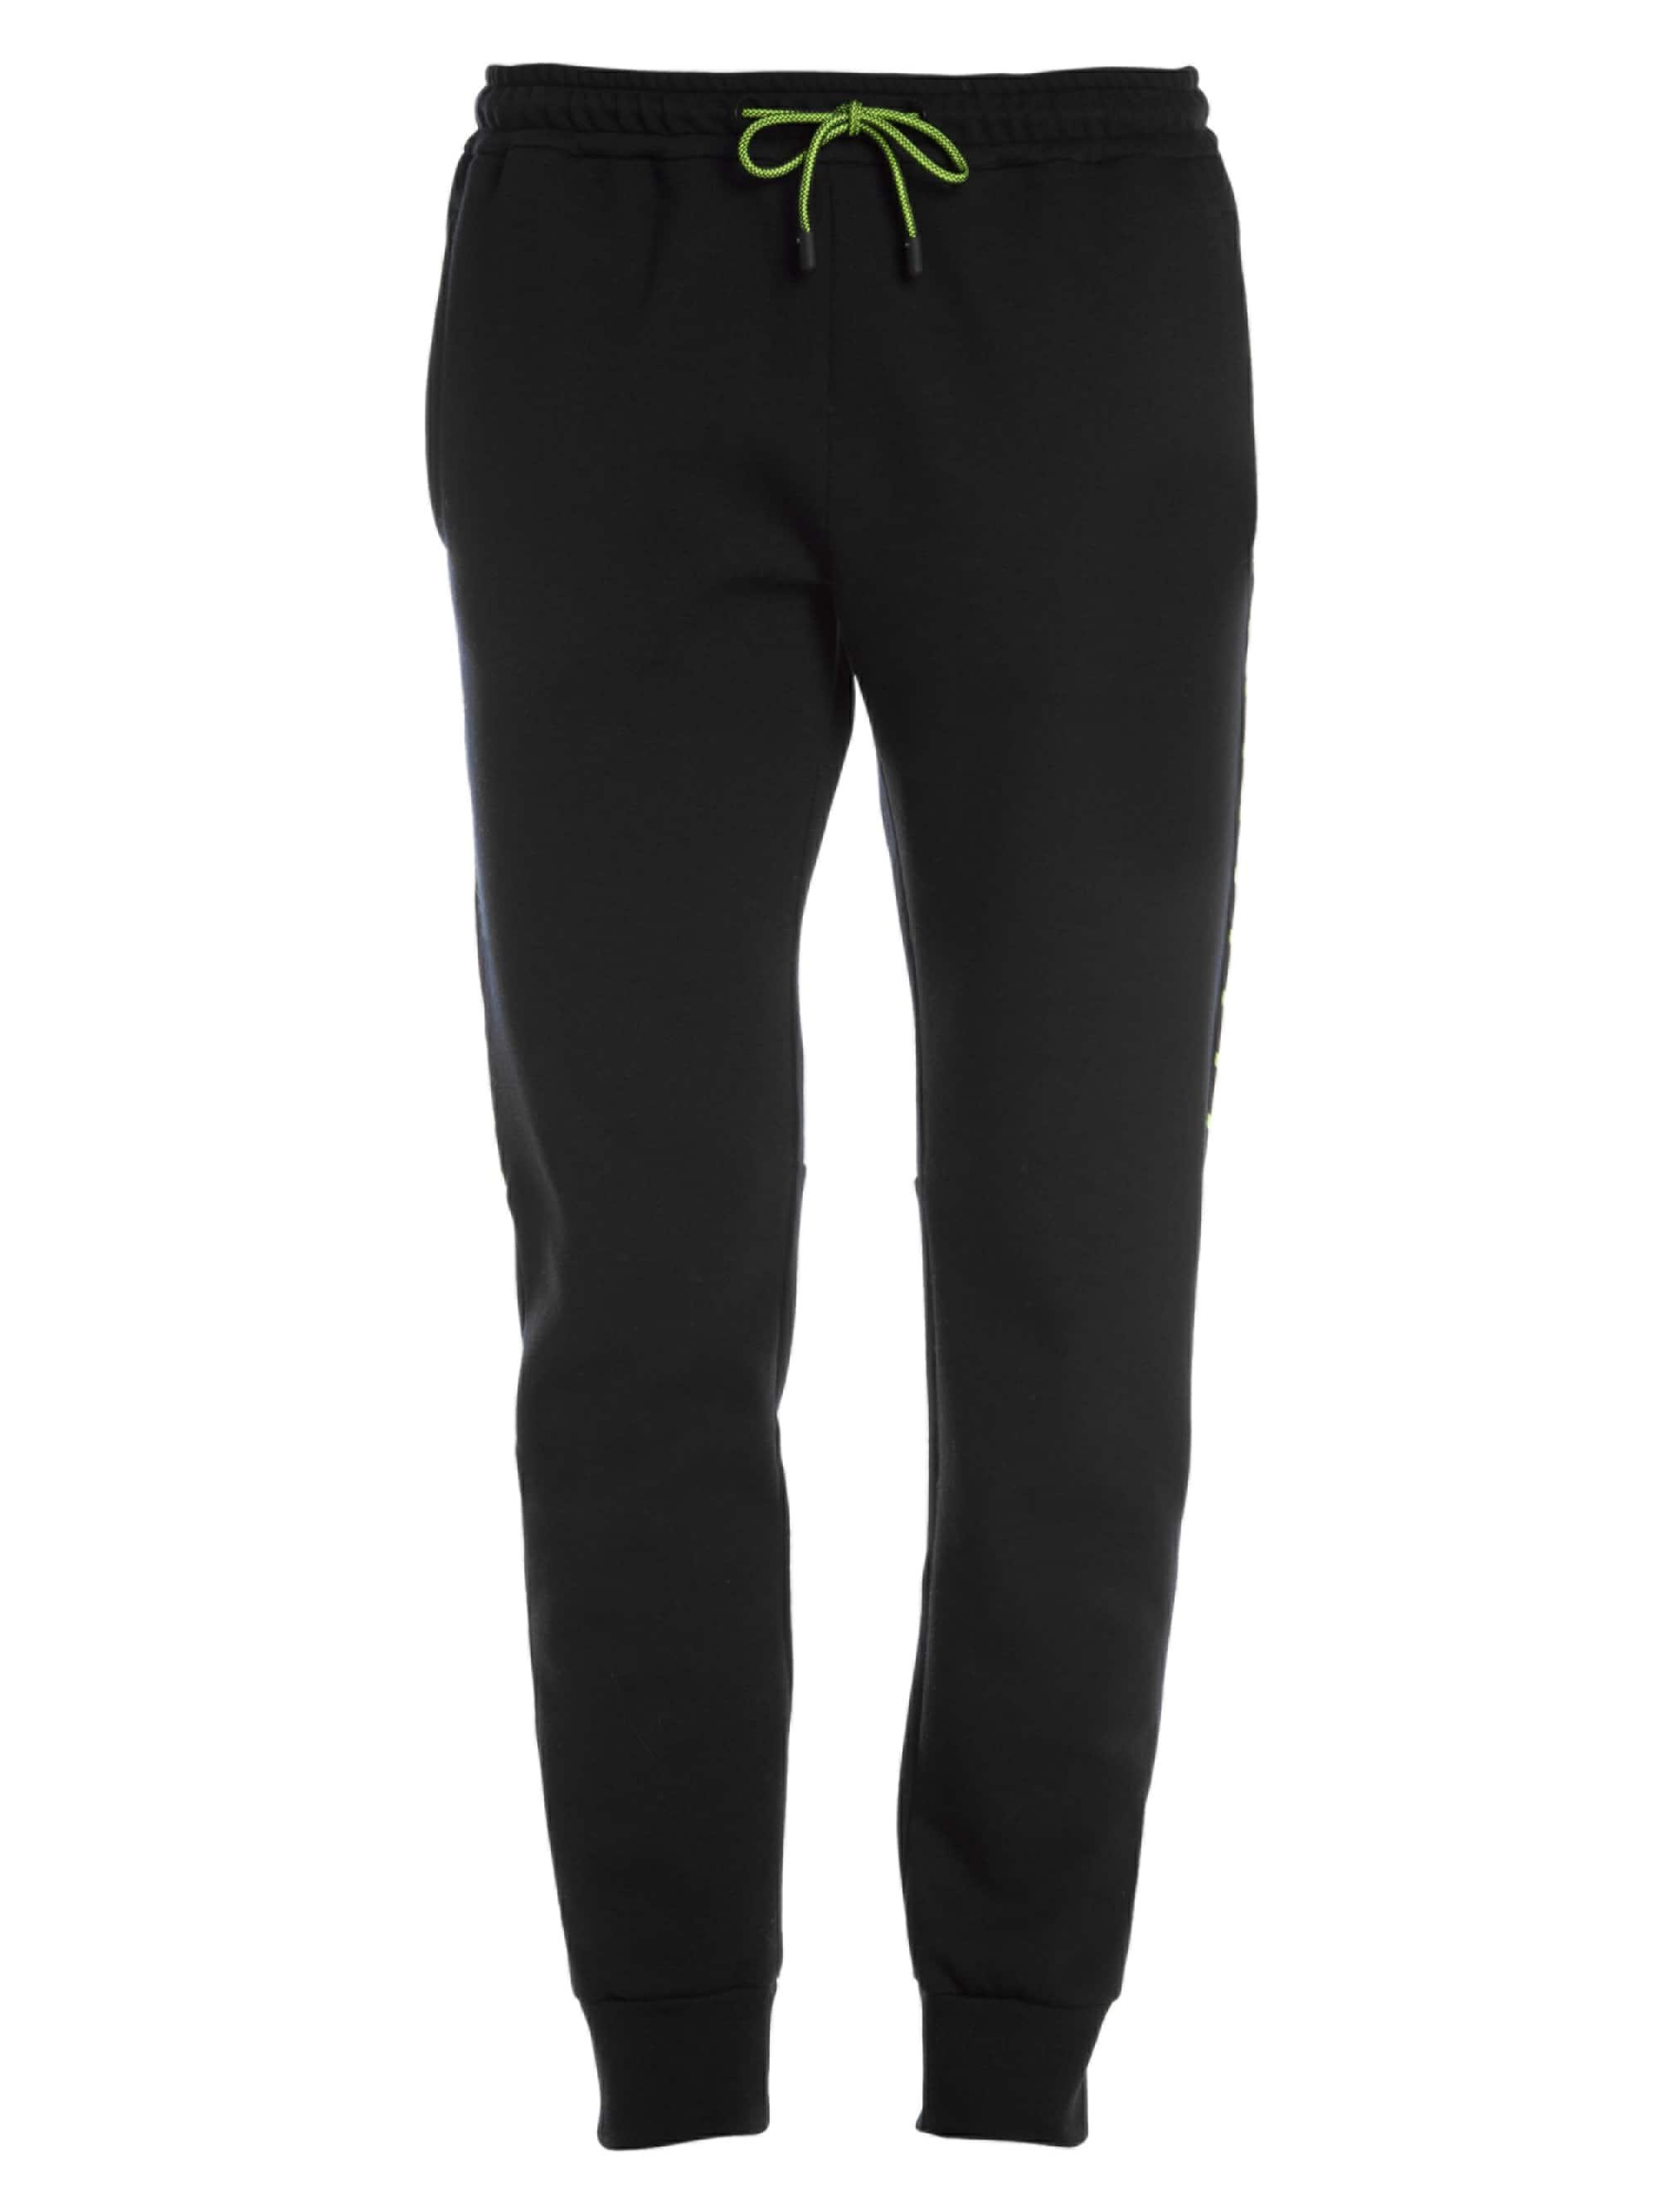 Fendi Cotton Fluorescent I See Sweatpants in Black for Men - Lyst